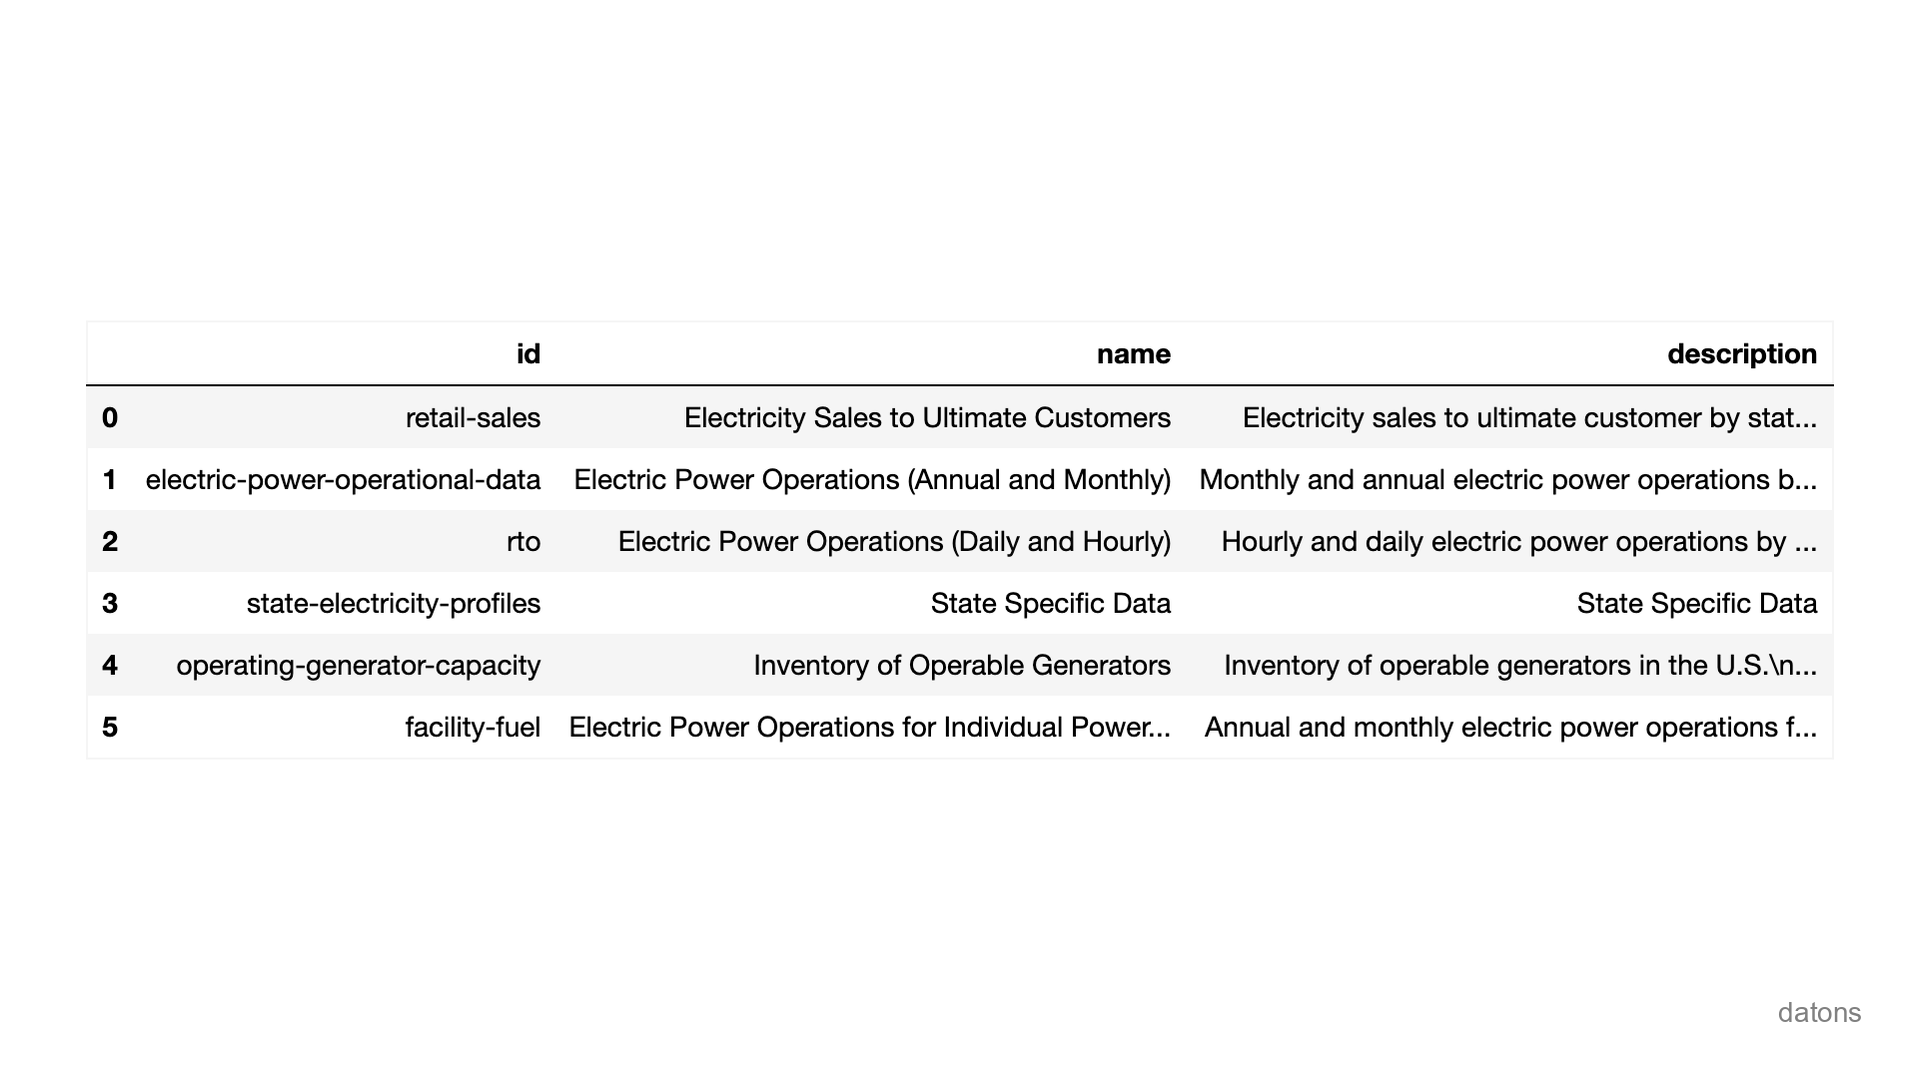 Processing US energy data with EIA API